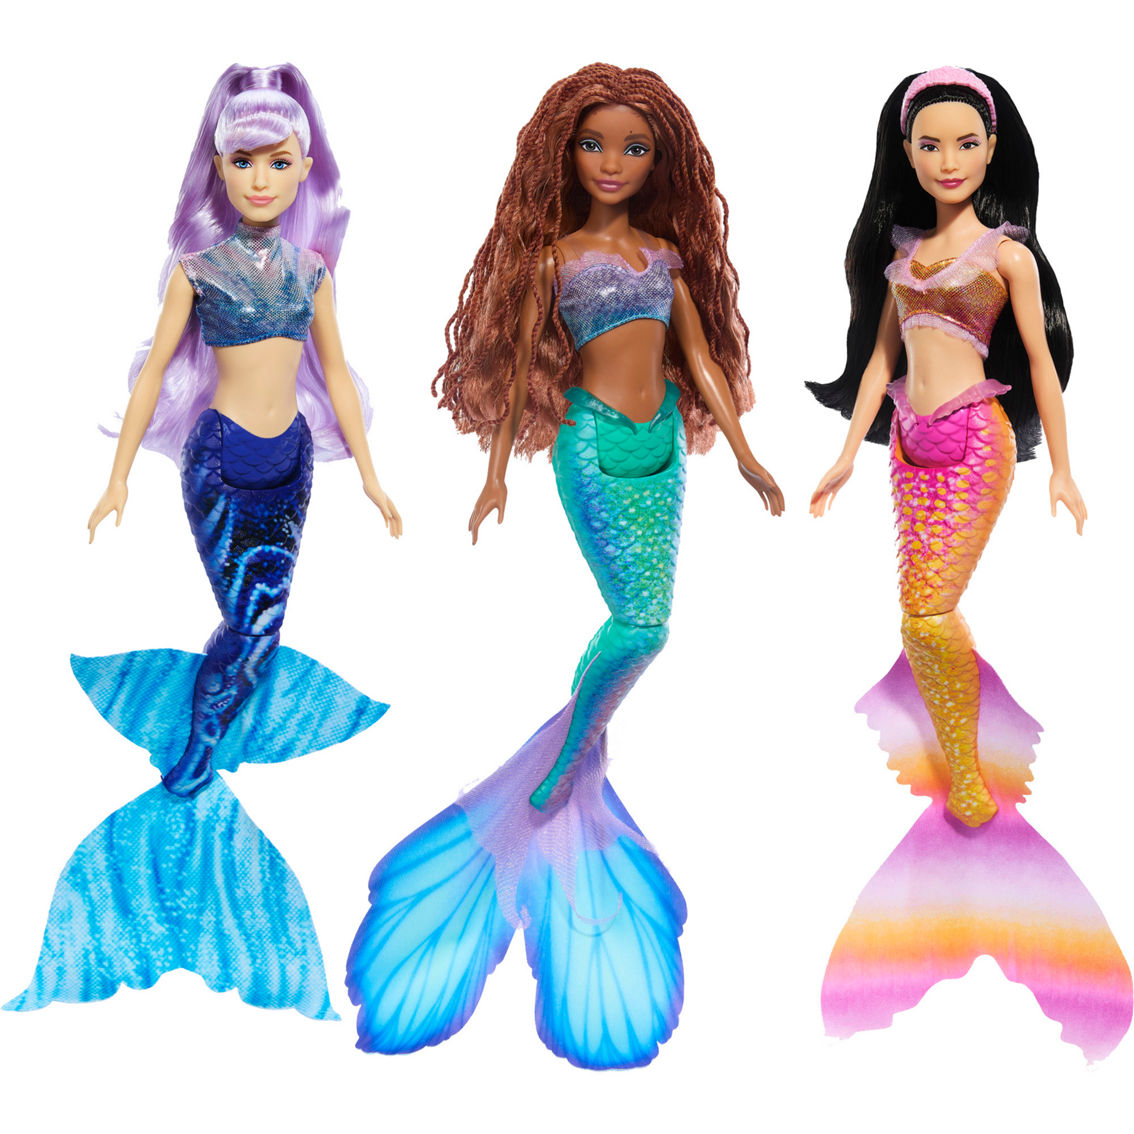 Disney The Little Mermaid Sisters Doll 3 pk. - Image 2 of 9